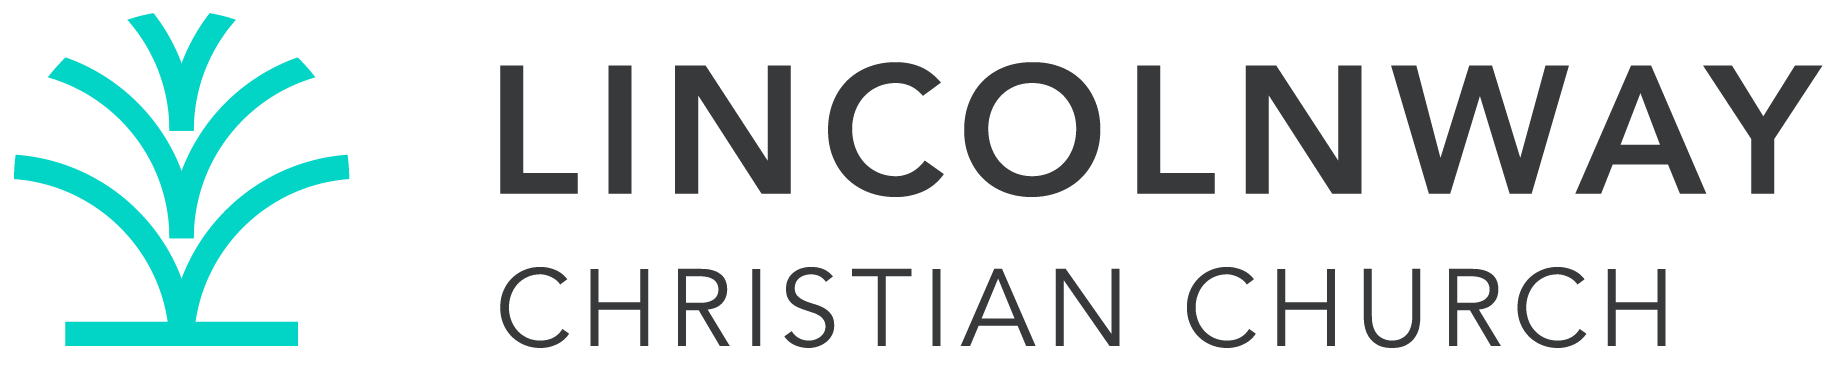 Lincolnway Christian Church